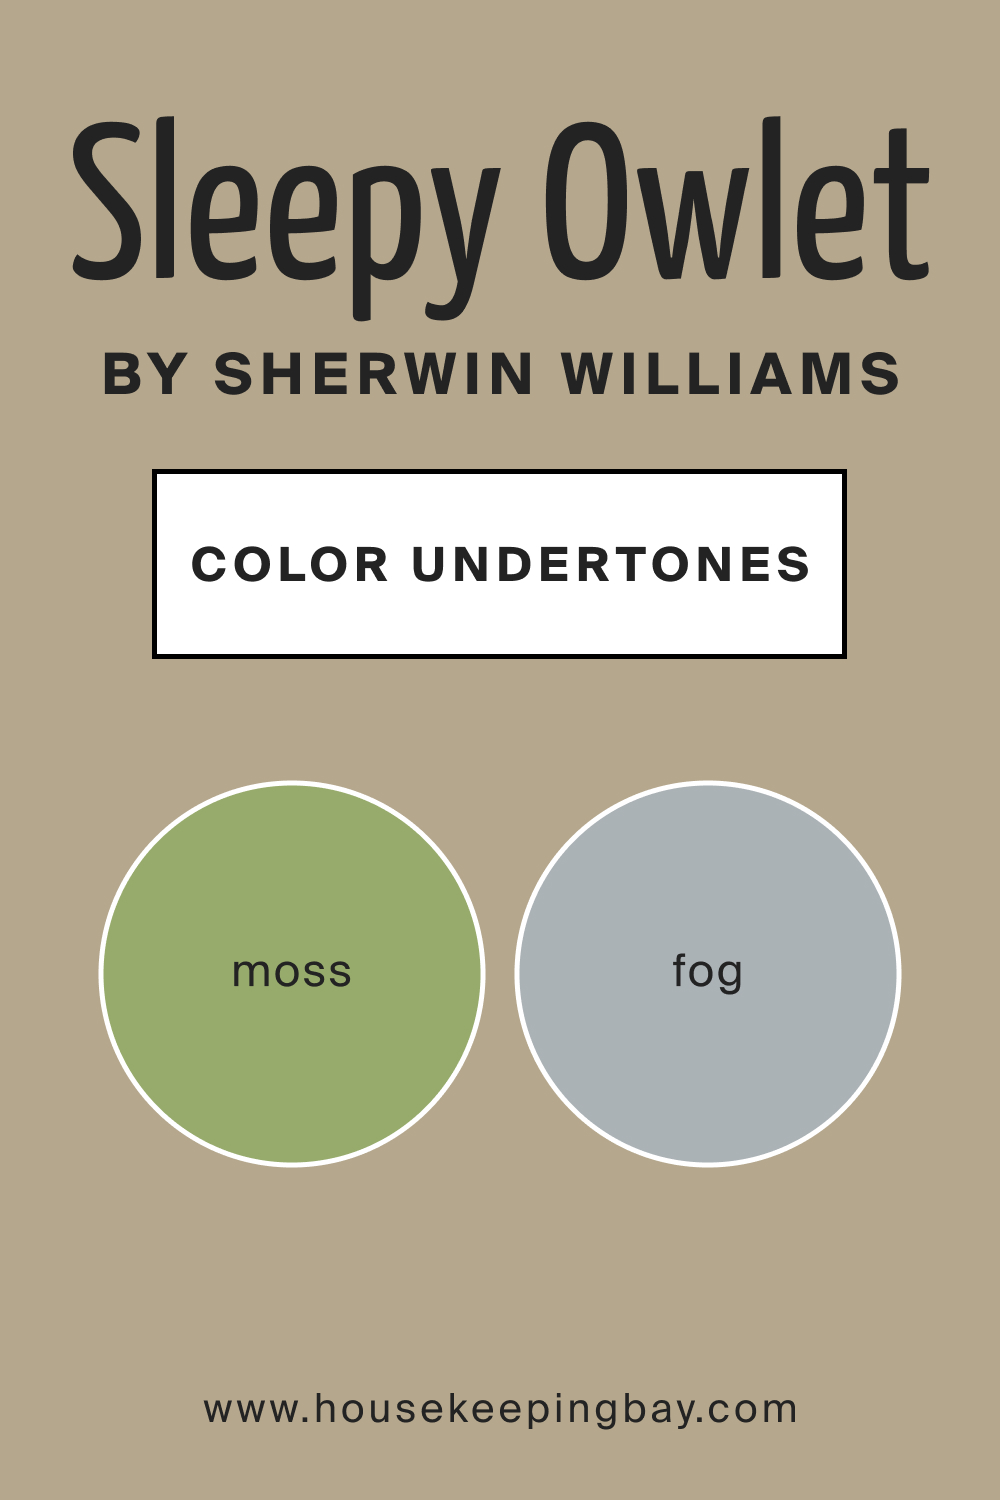 SW 9513 Sleepy Owlet by Sherwin Williams Color Undertone